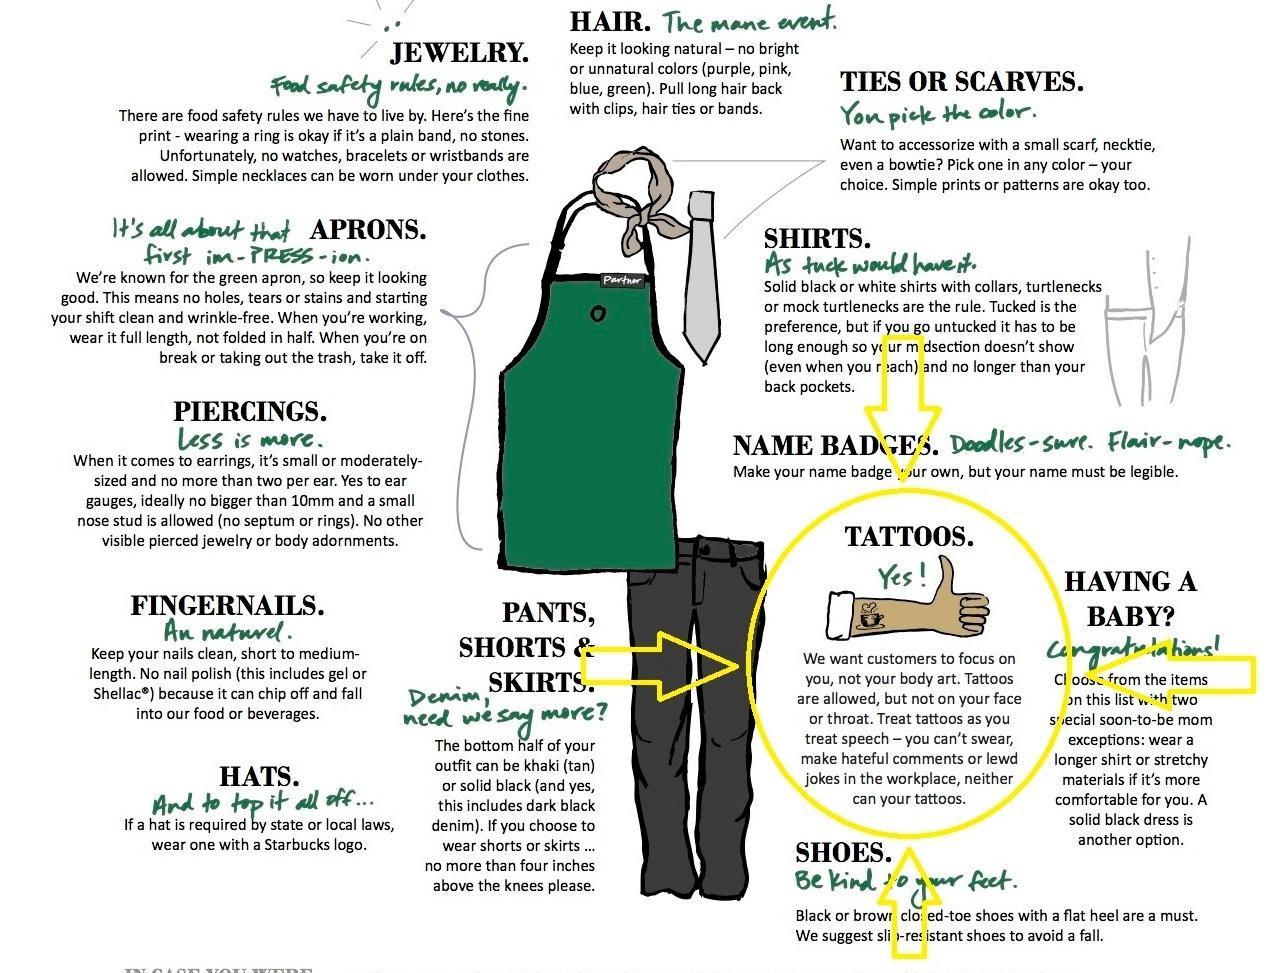 How strict is Starbucks dress code